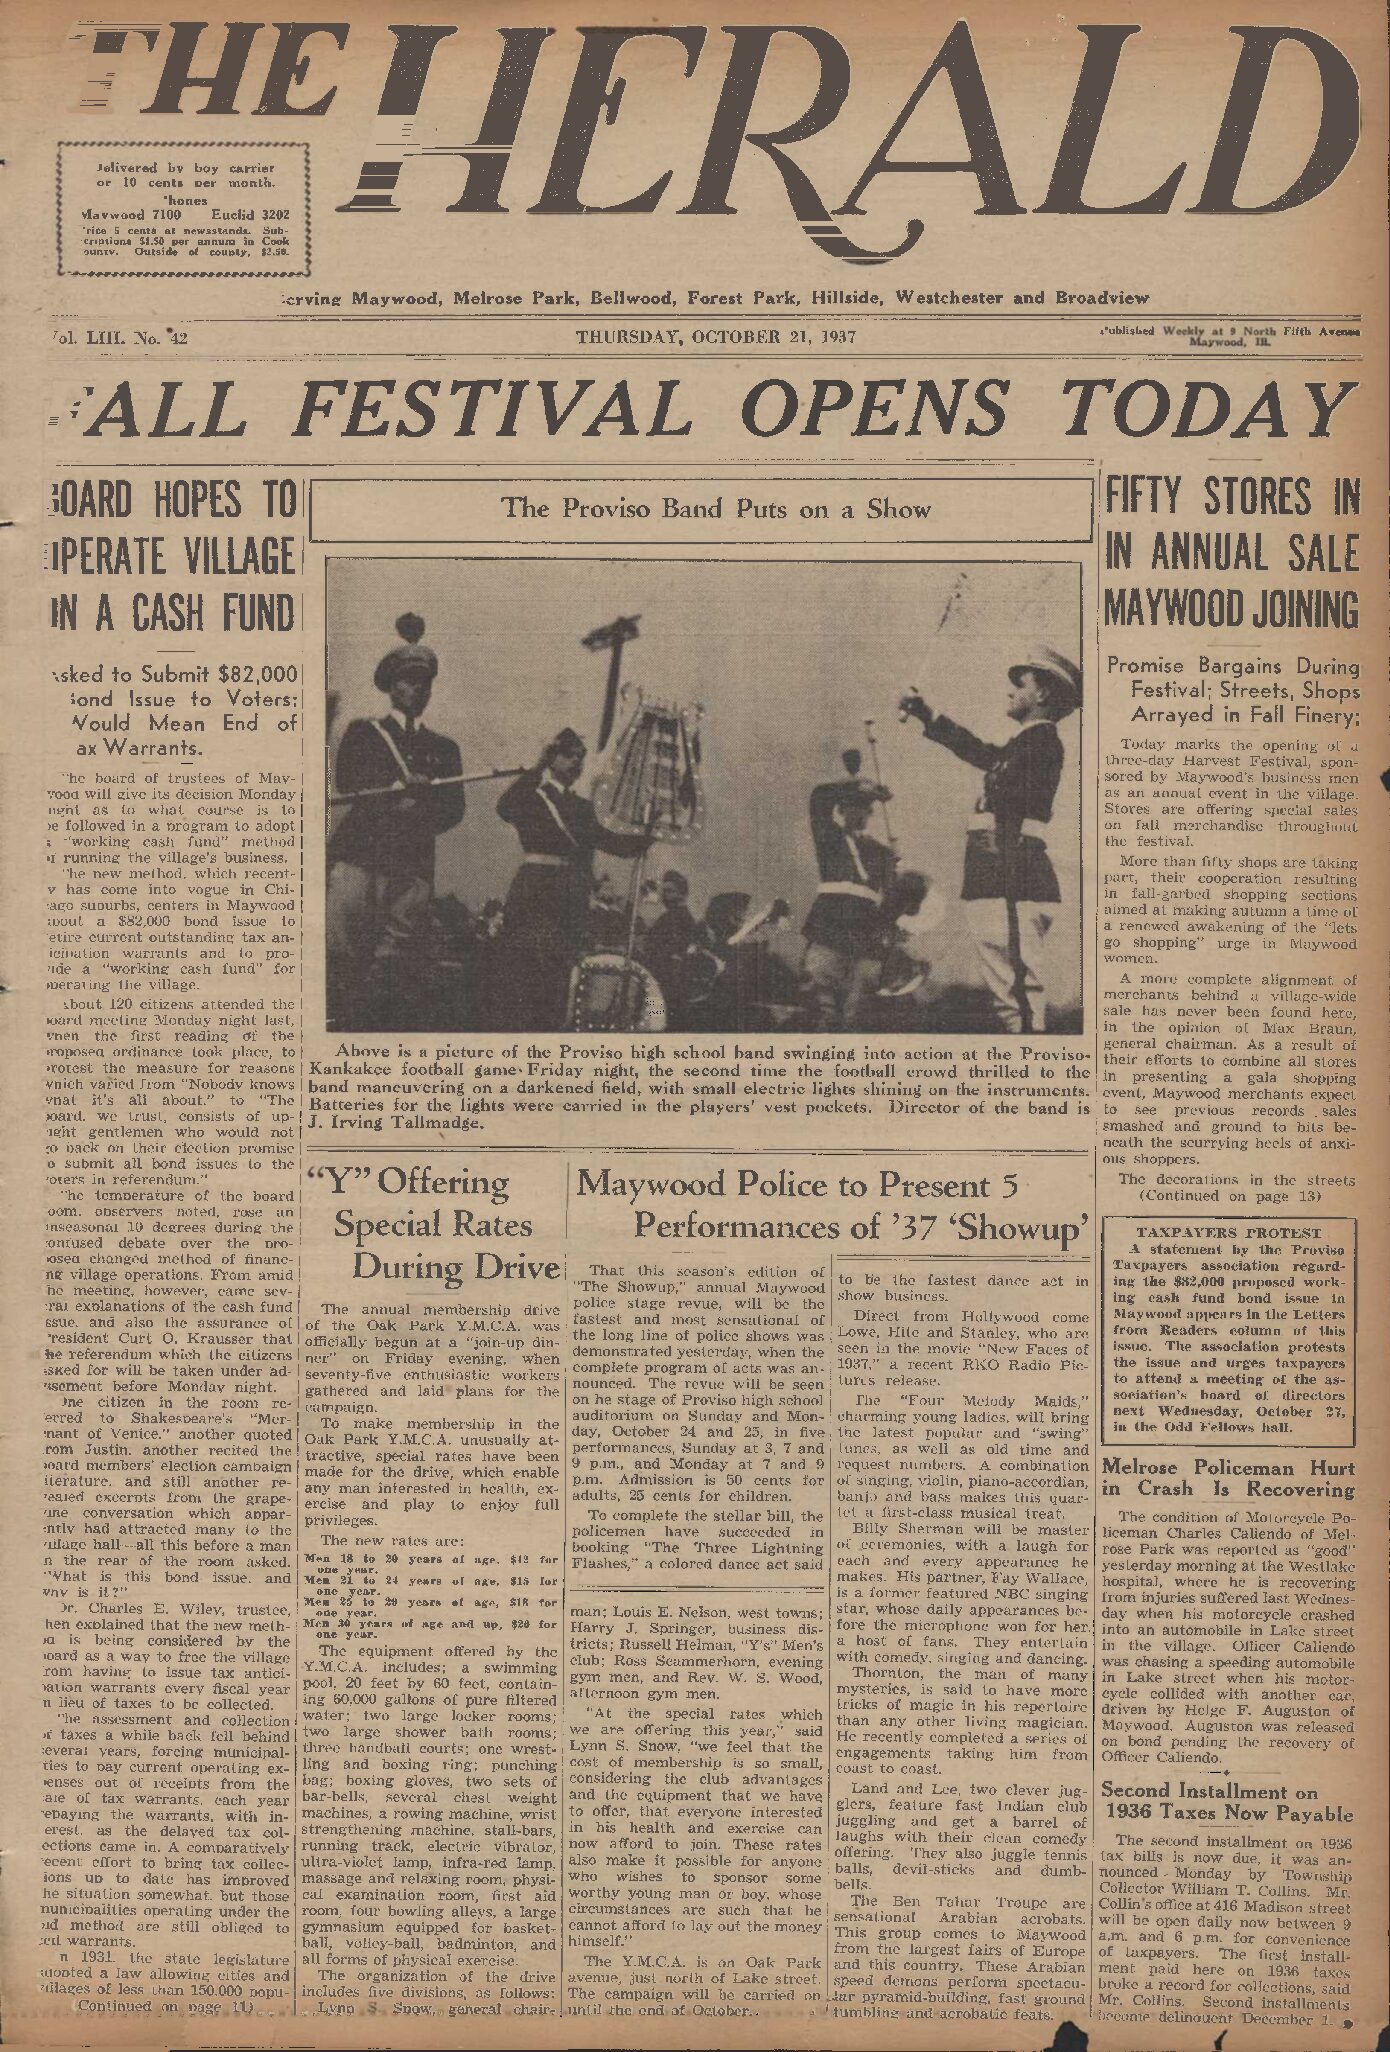 The Herald – 19371021